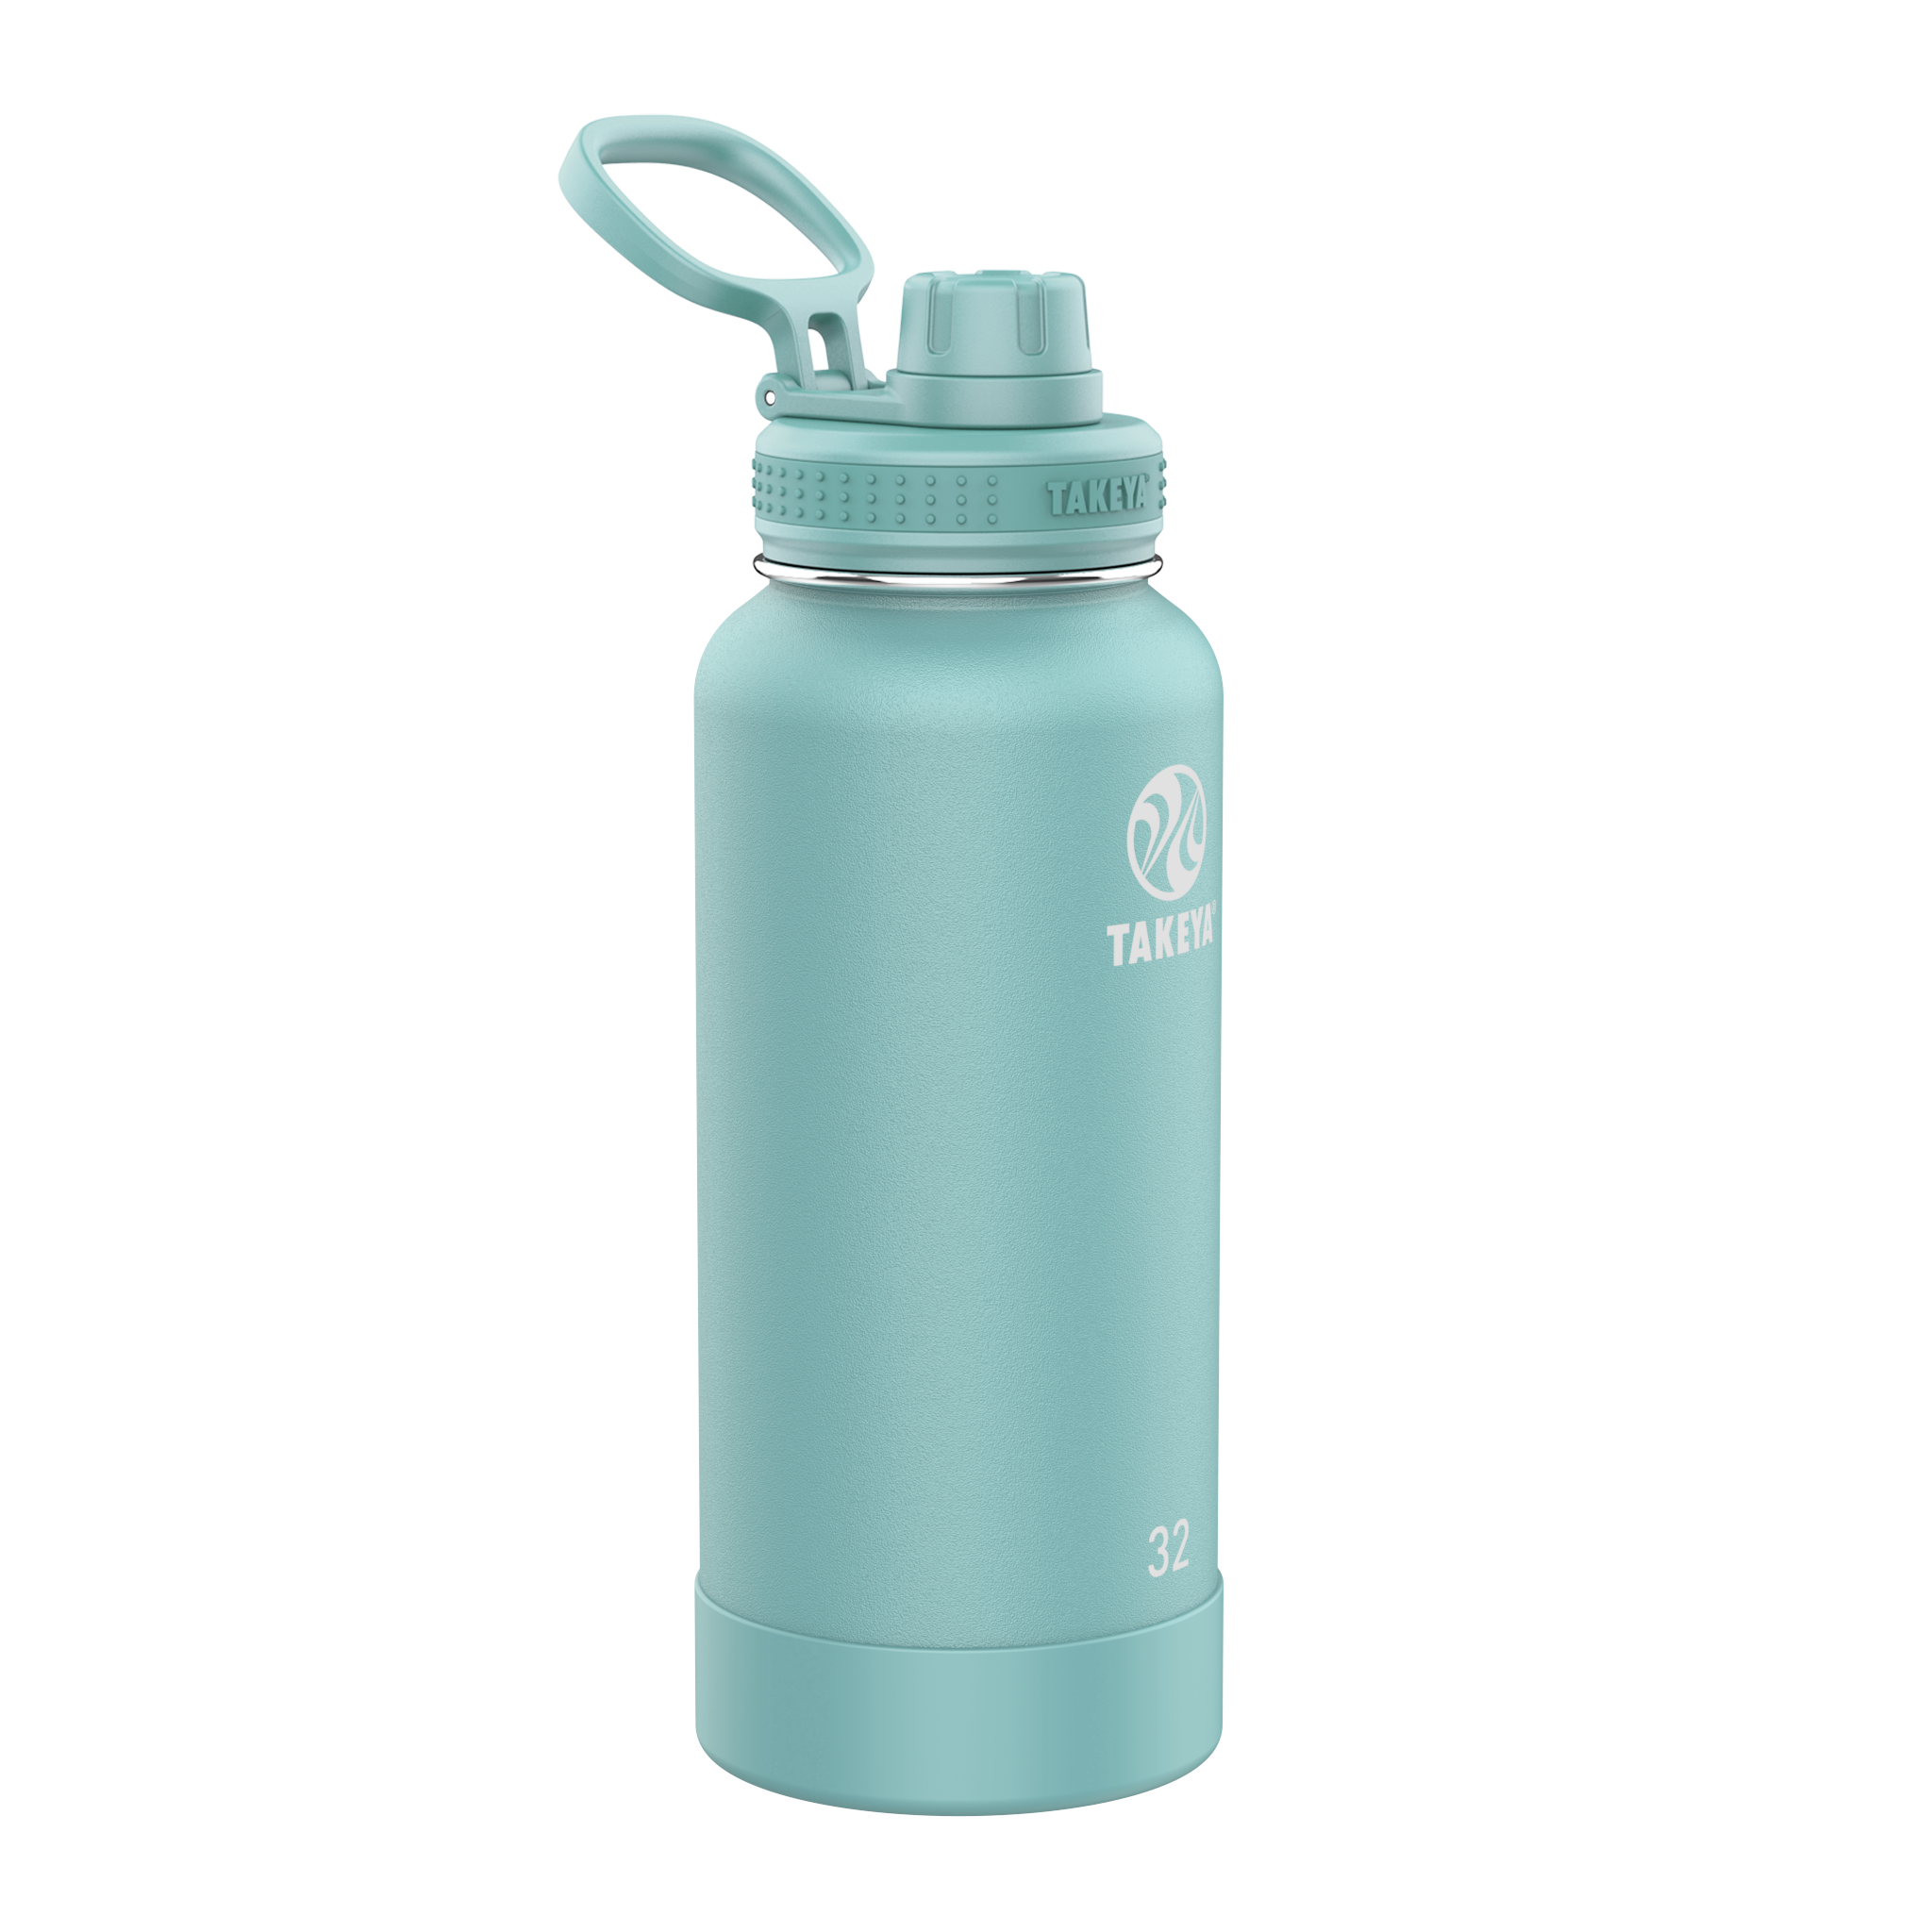 Takeya Actives Insulated Water Bottle w/Spout Lid Bluestone 32 Ounce